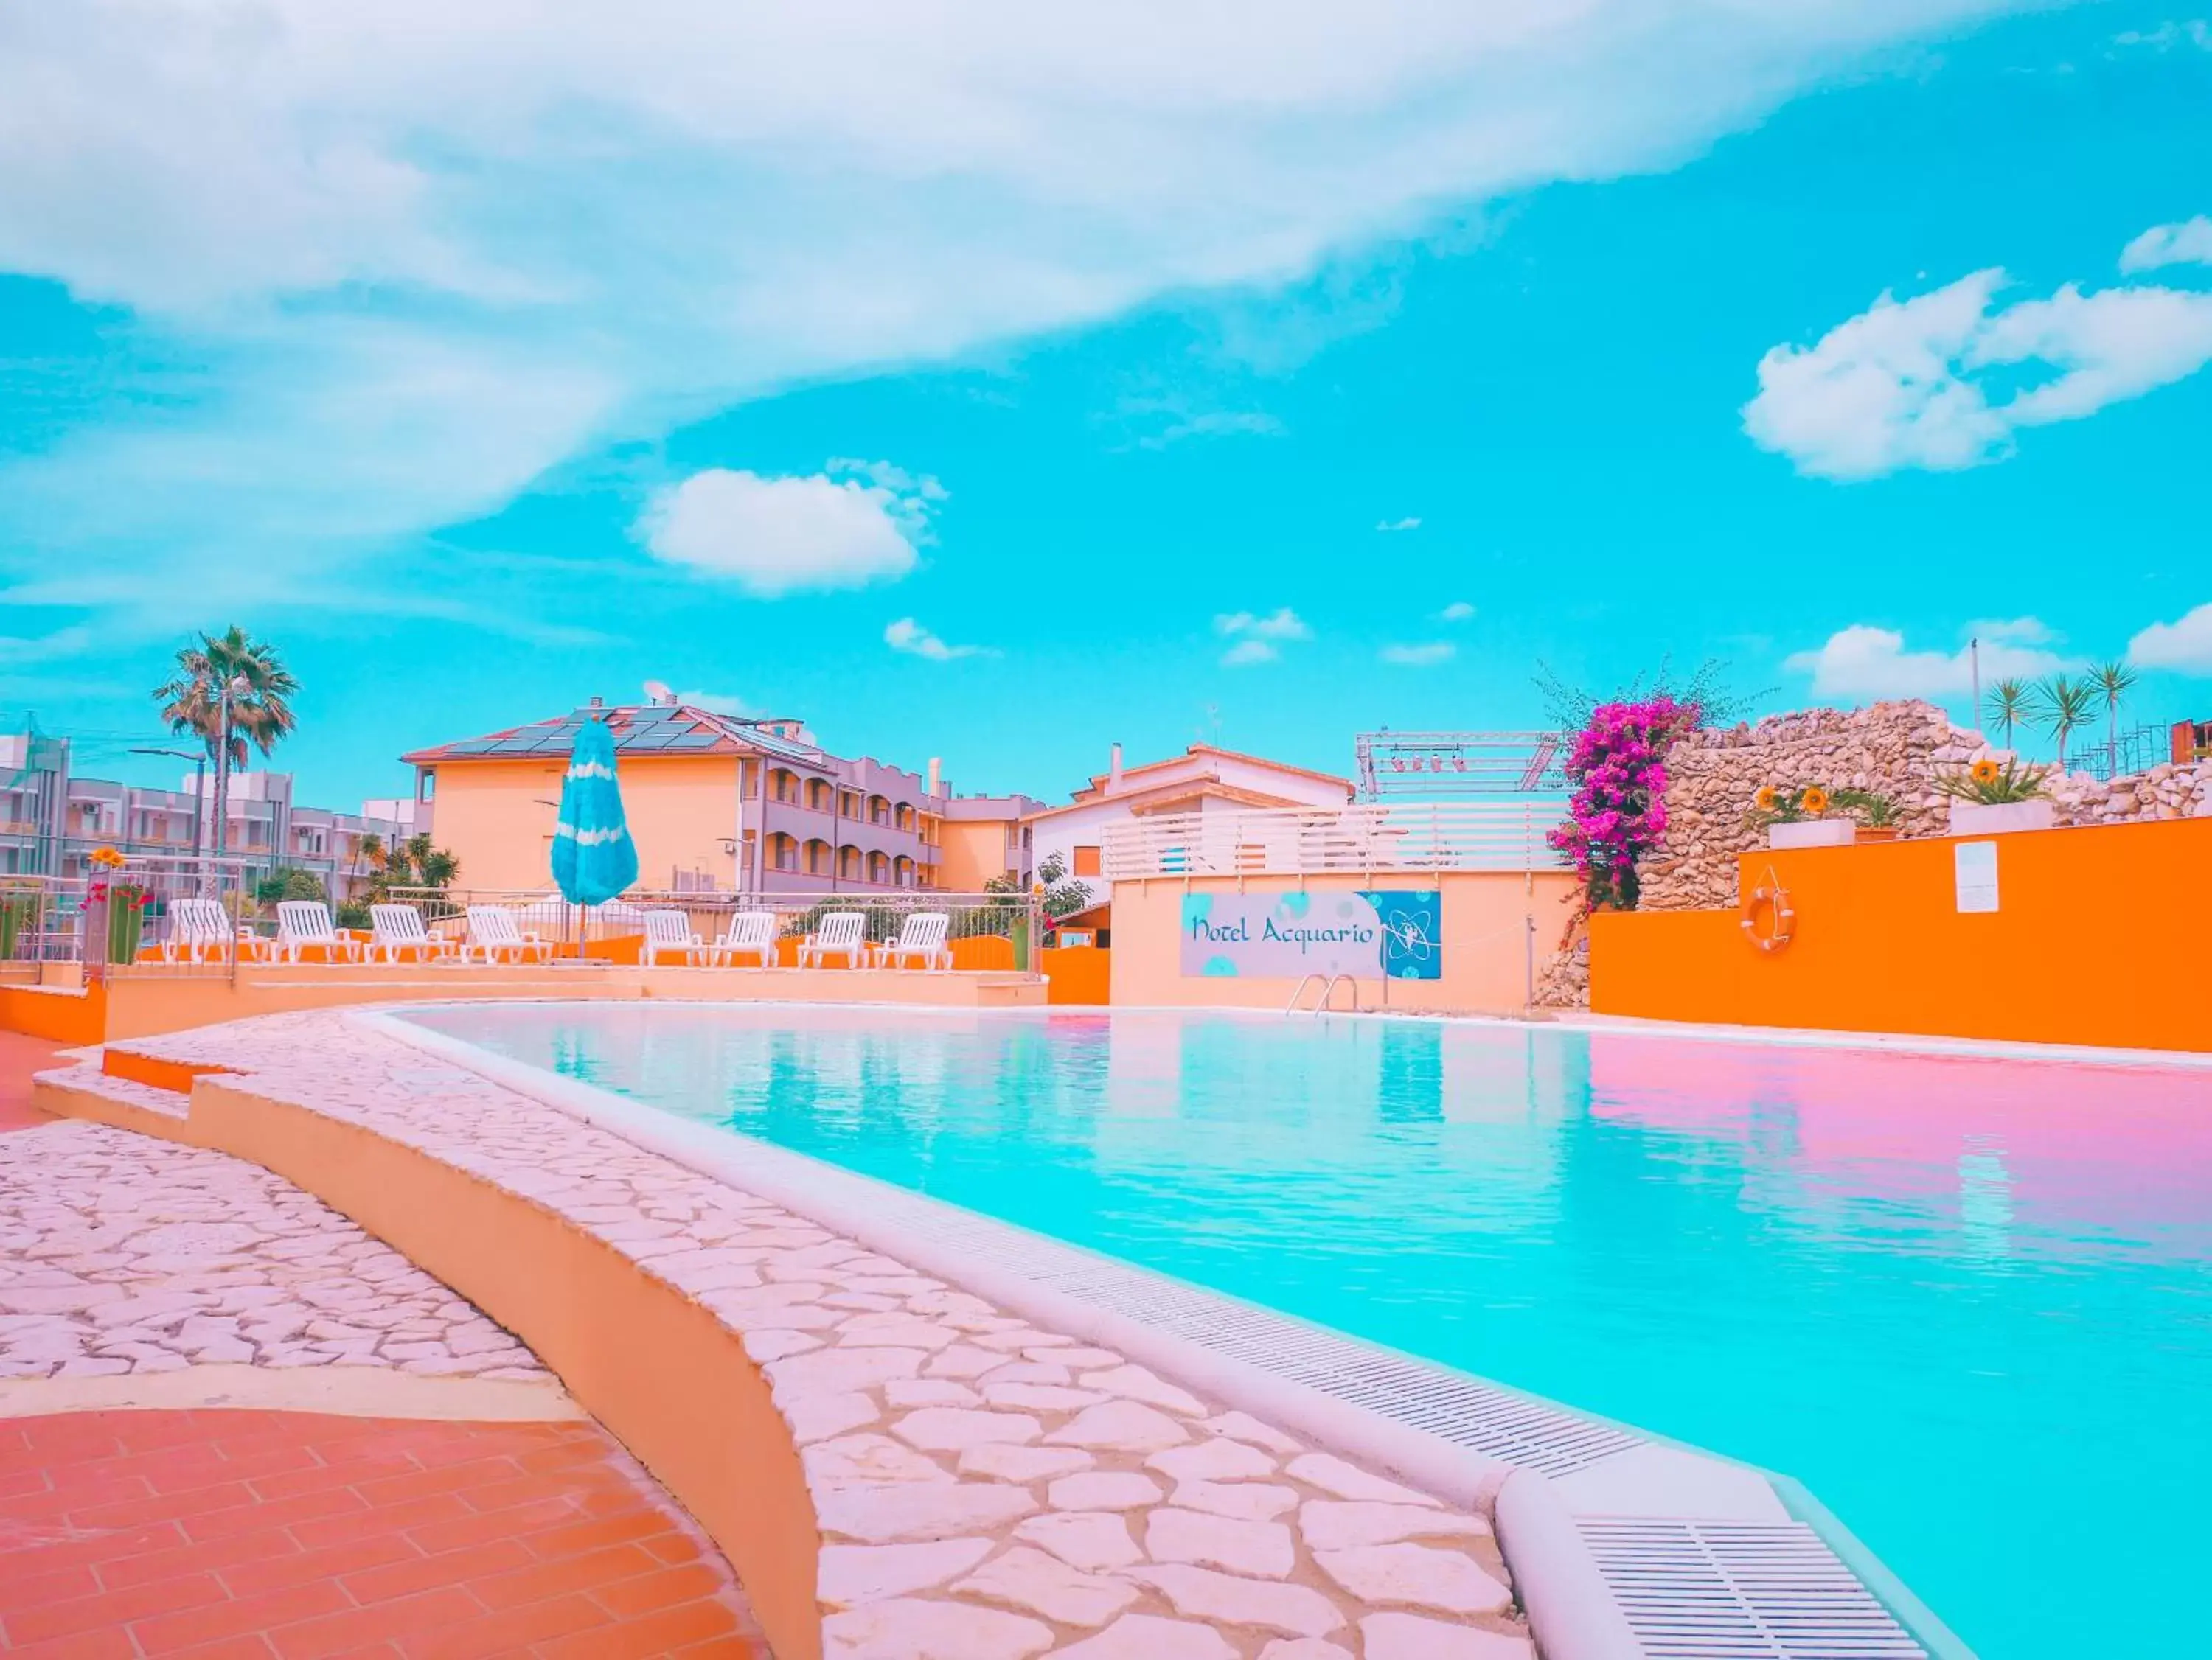 Swimming Pool in Hotel Acquario